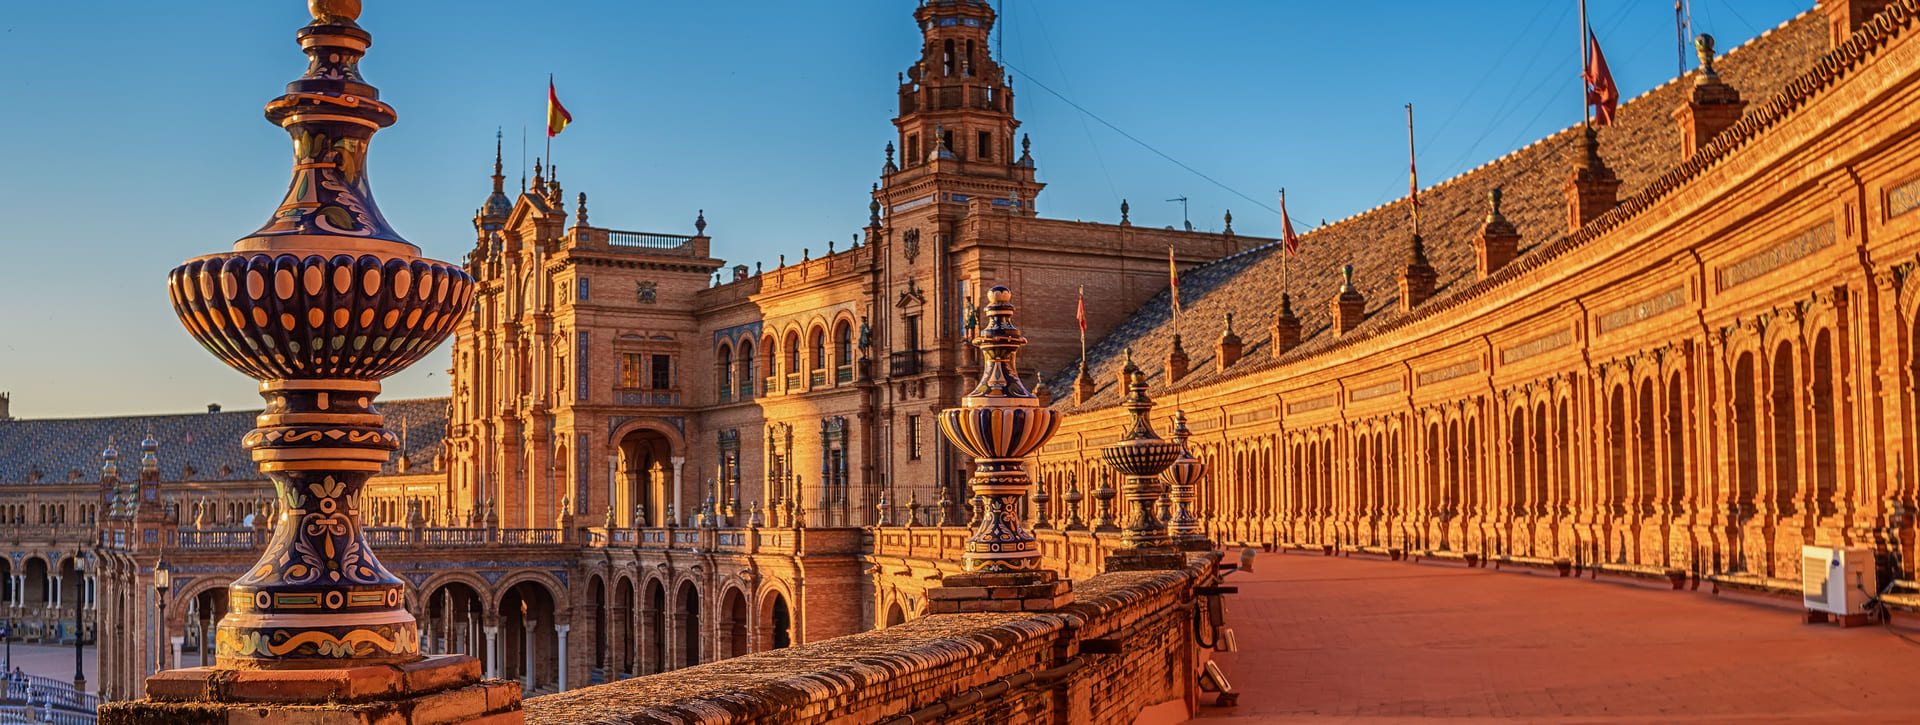 Tour Sevilla encantada: descubre sus misterios y leyendas